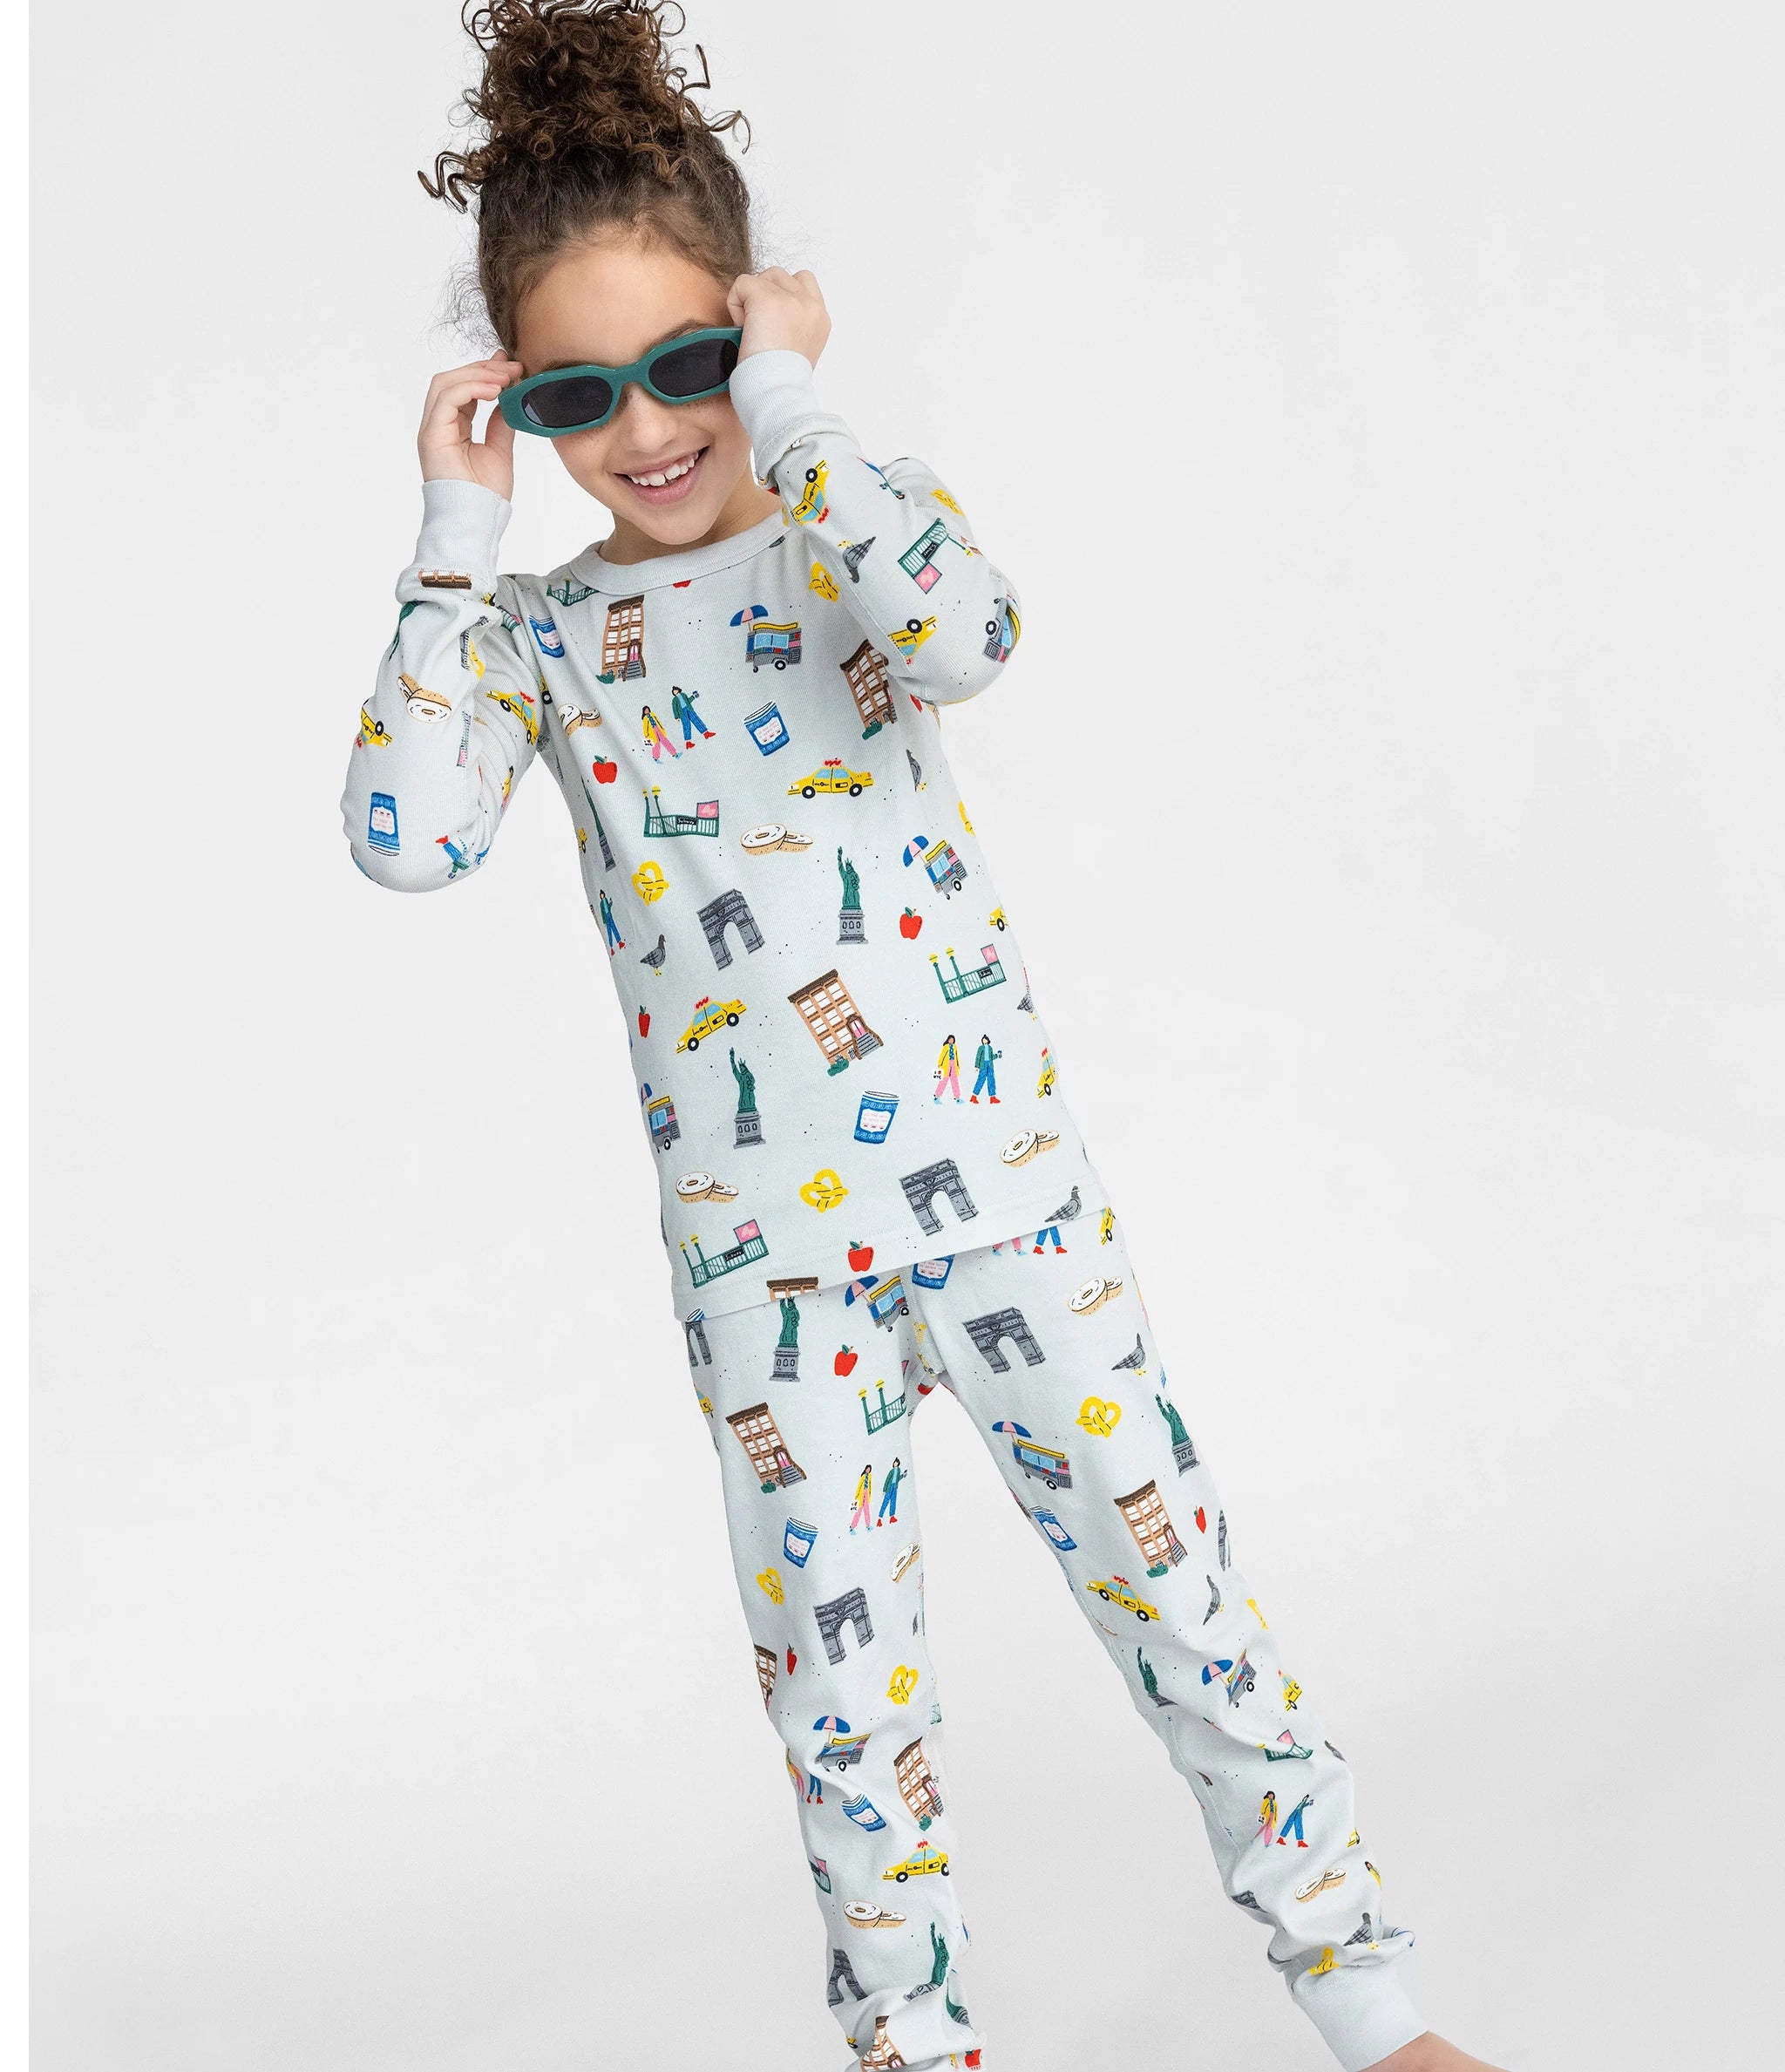 little girl wearing the pajamas